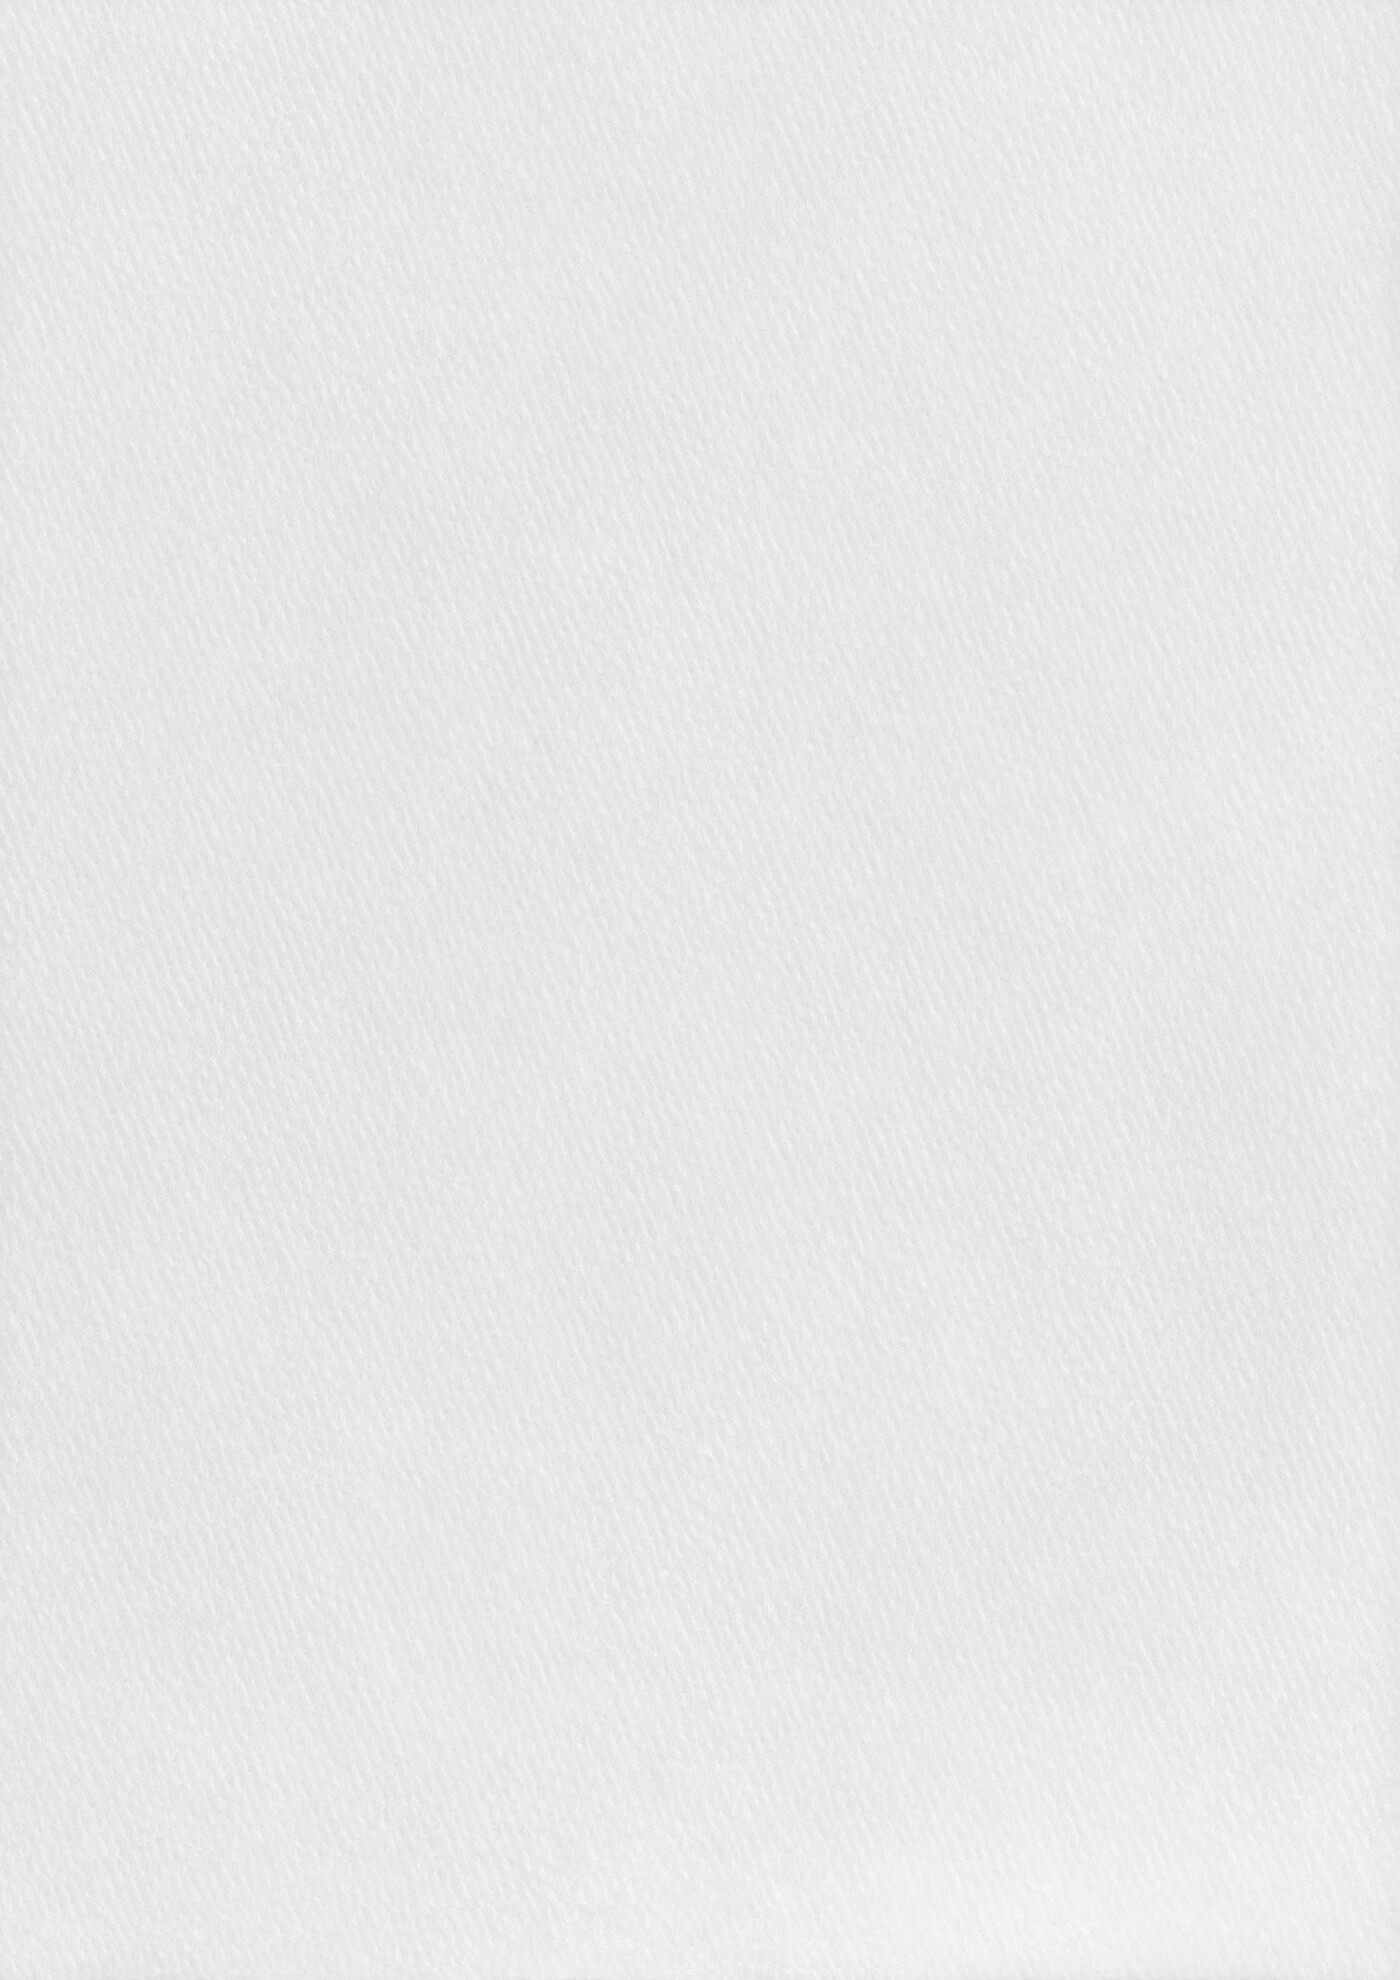 ArtStation - 26 White Paper Background Textures